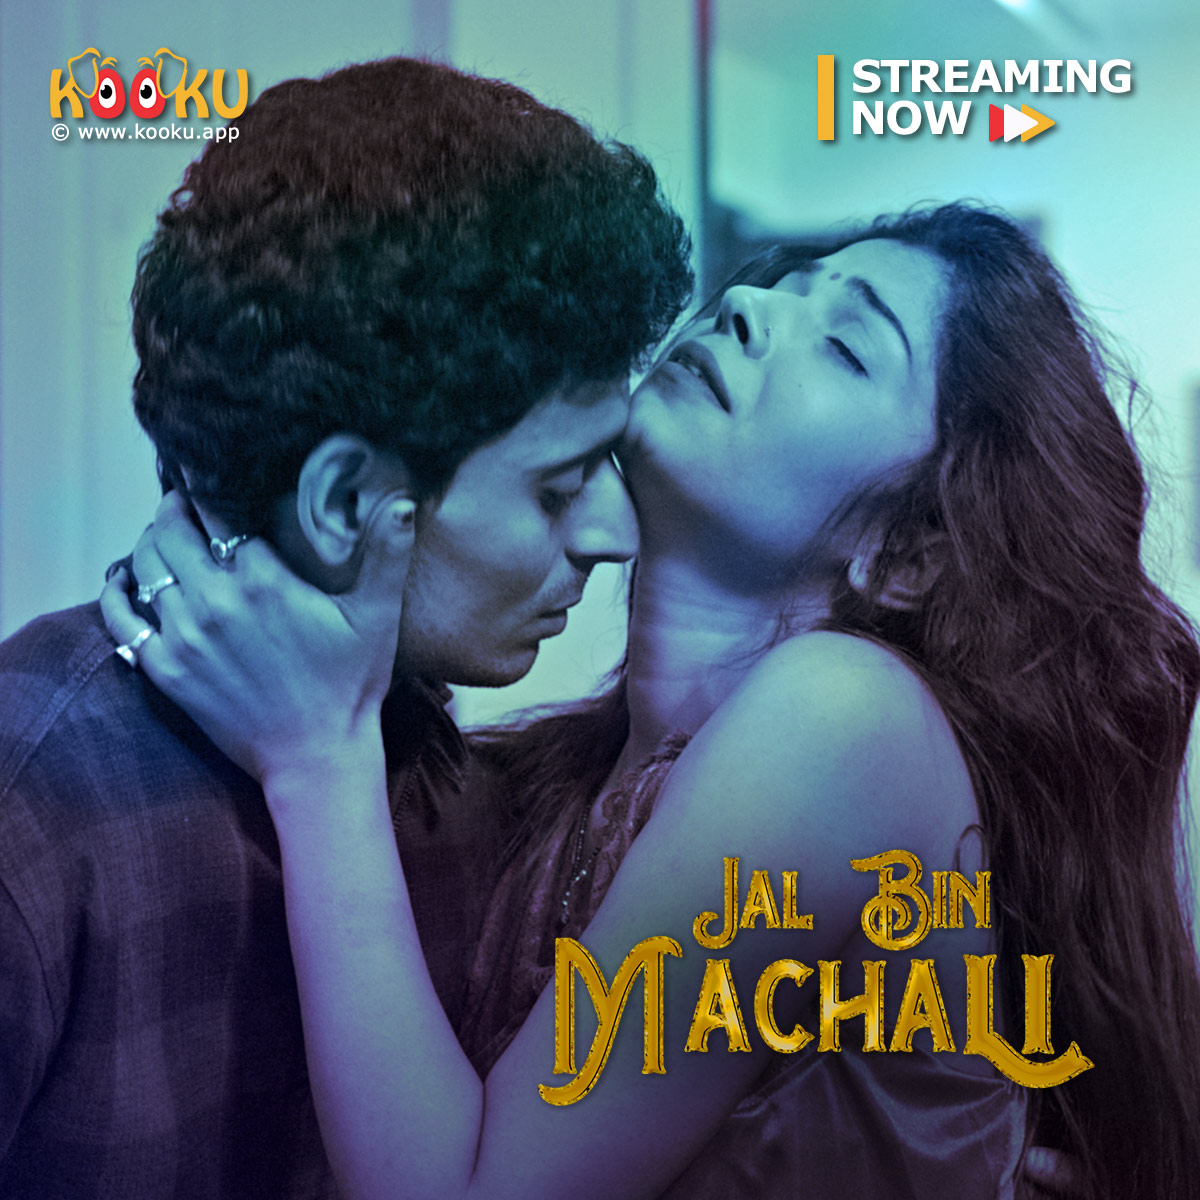 Jal Bin Machali 2020 Hindi S01E01 Kokku Original Web Series 1080p HDRip 200MB Download